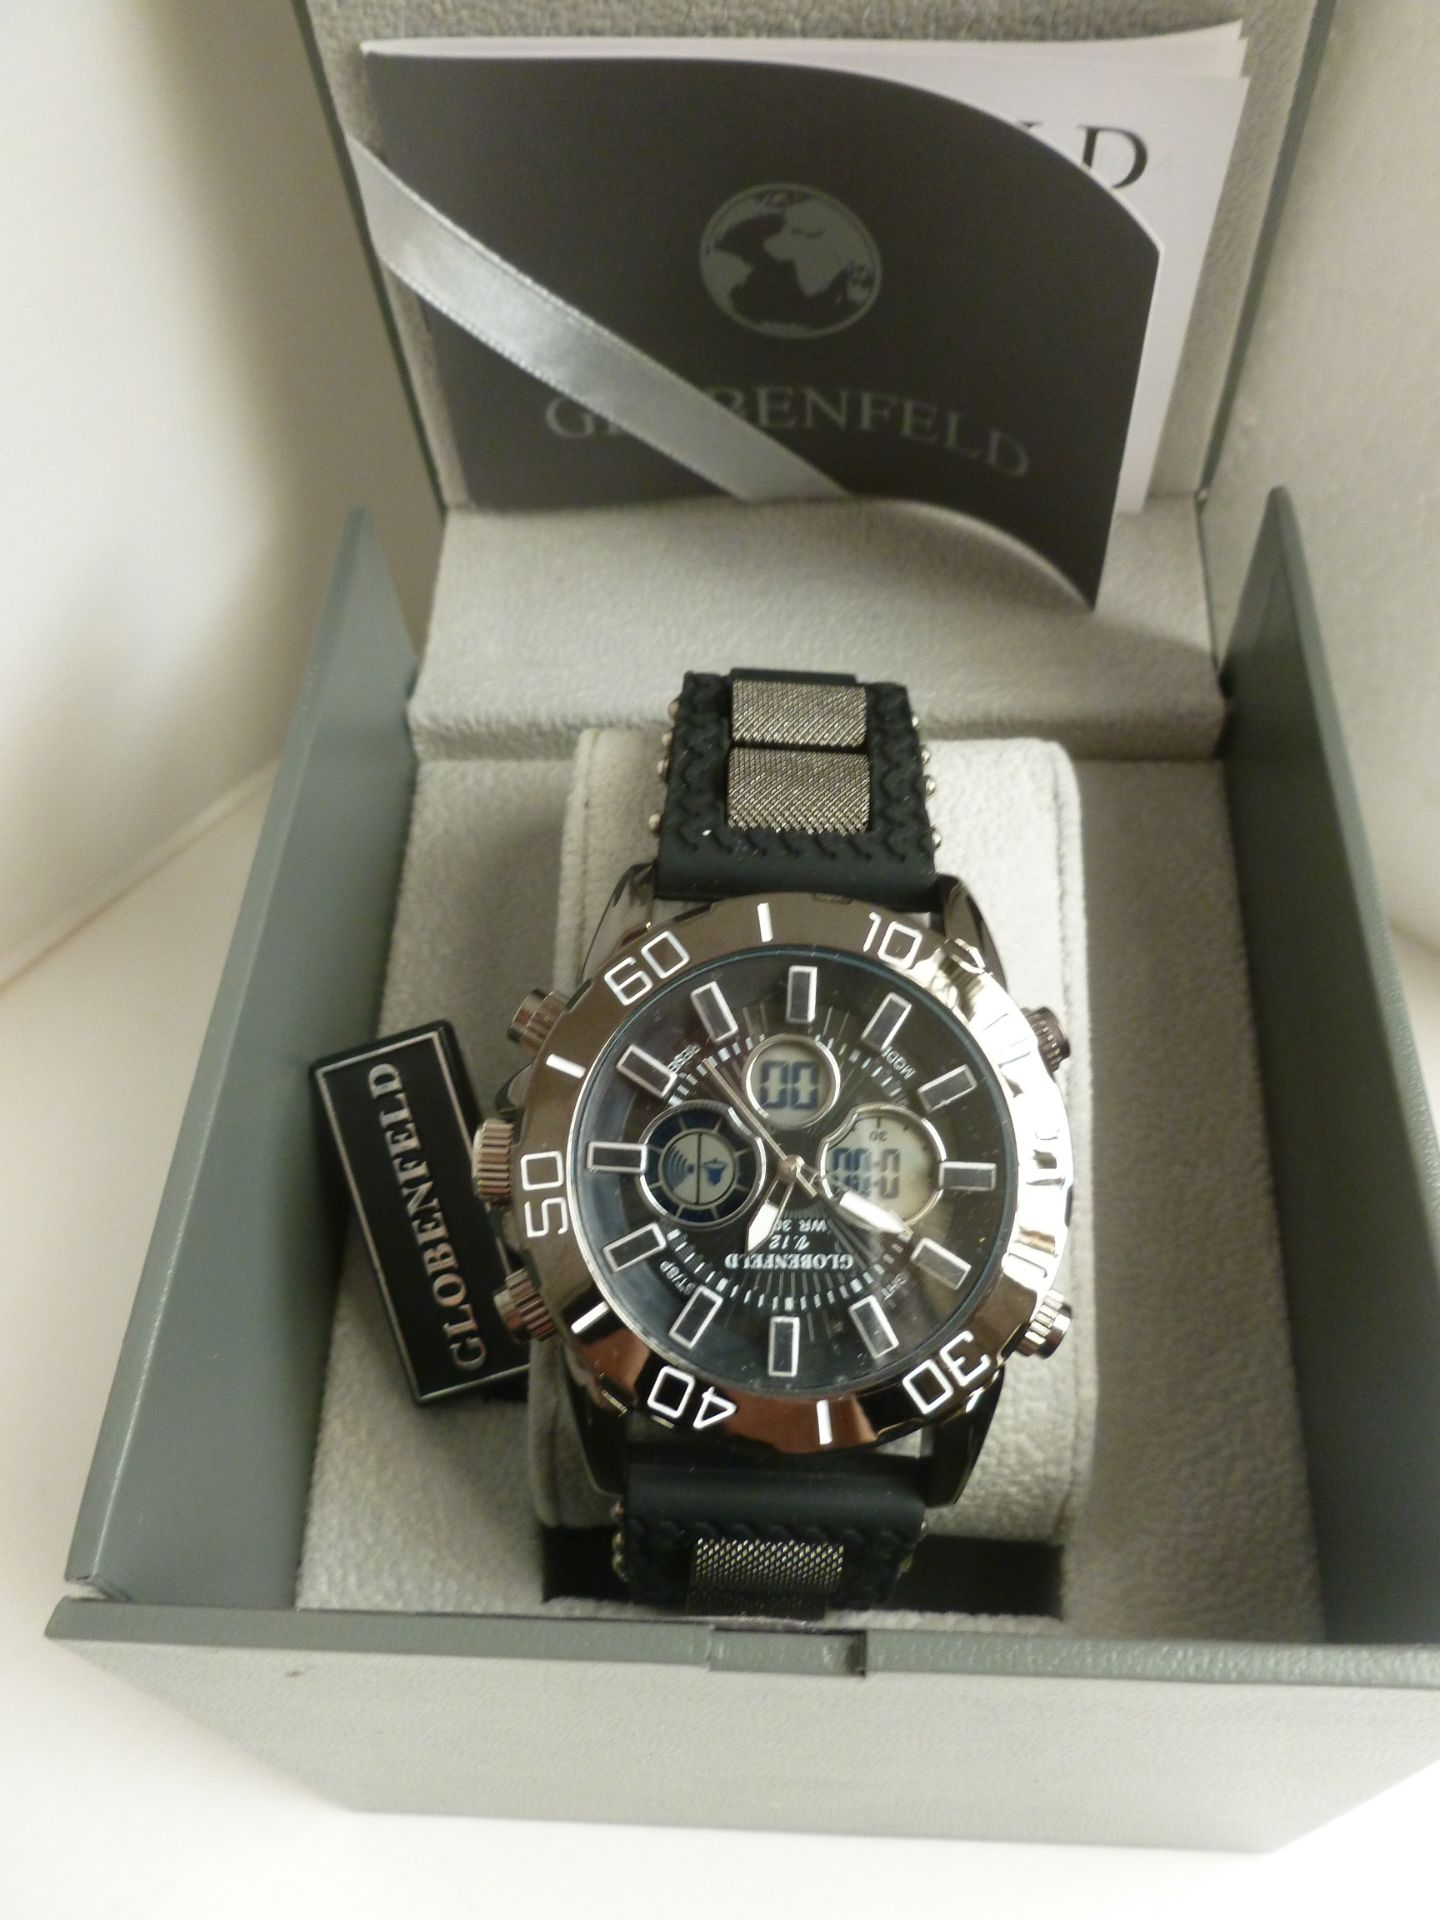 NO VAT!! Globenfeld Mens Black Face Rubber strapped Watch model 588 new in presentation box